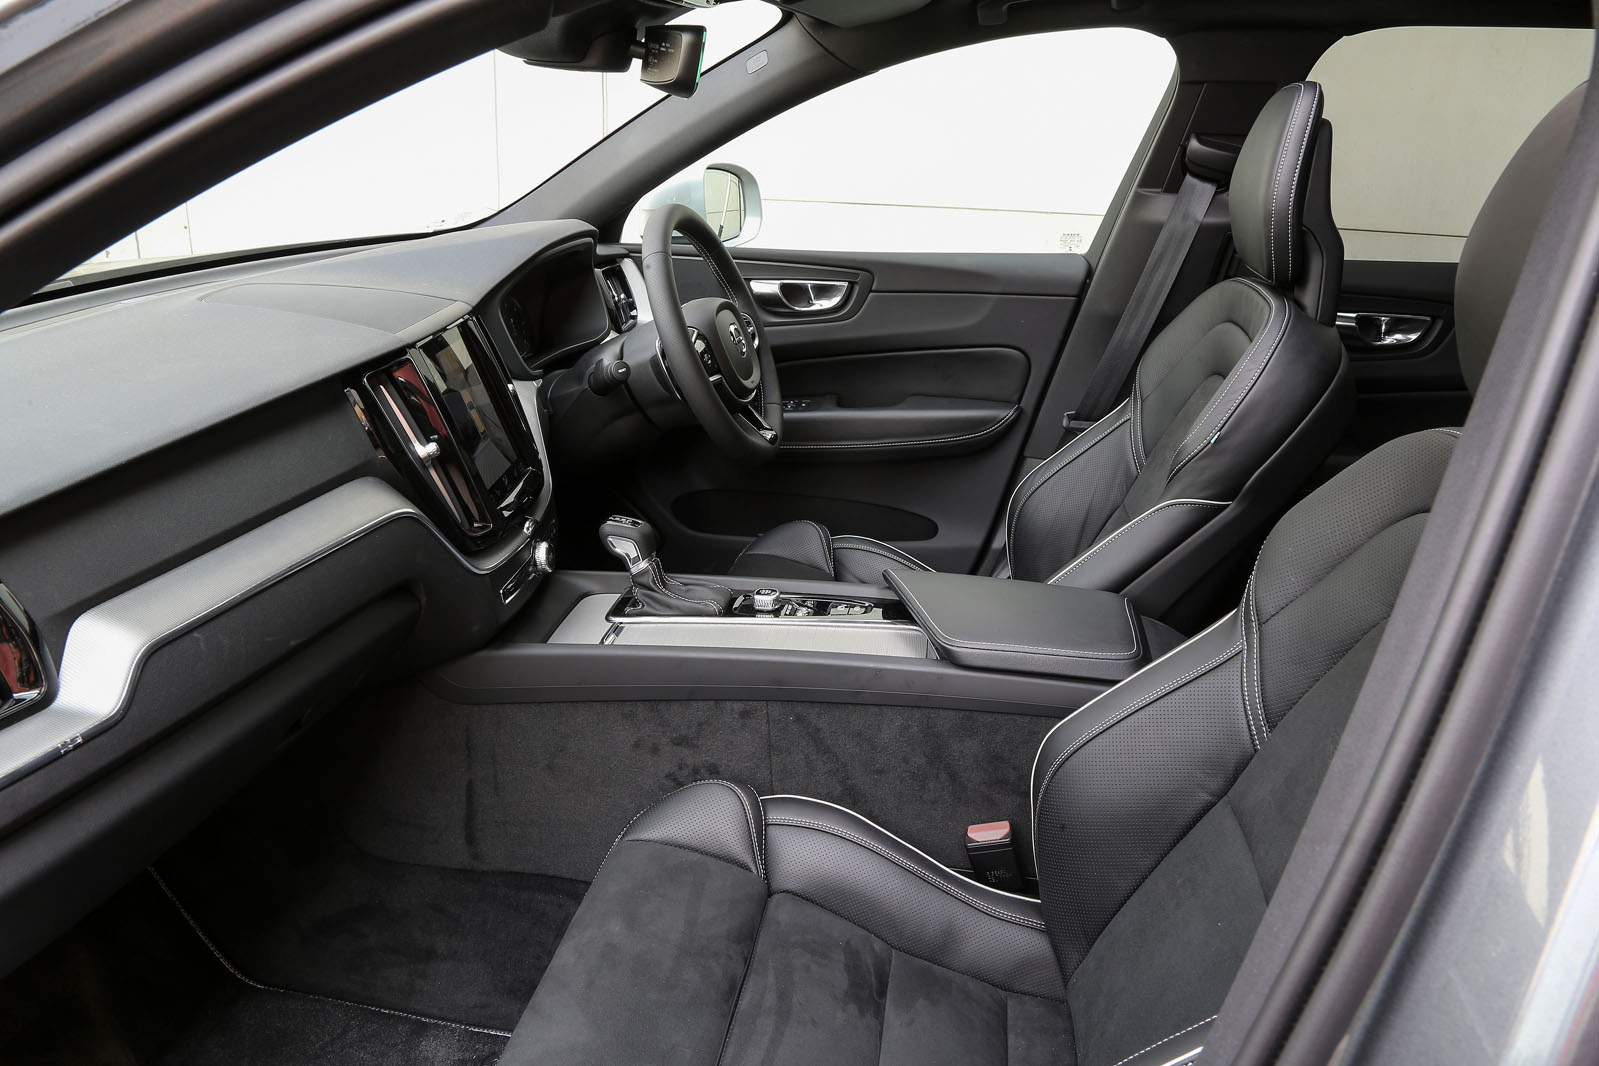 Volvo XC60 interior